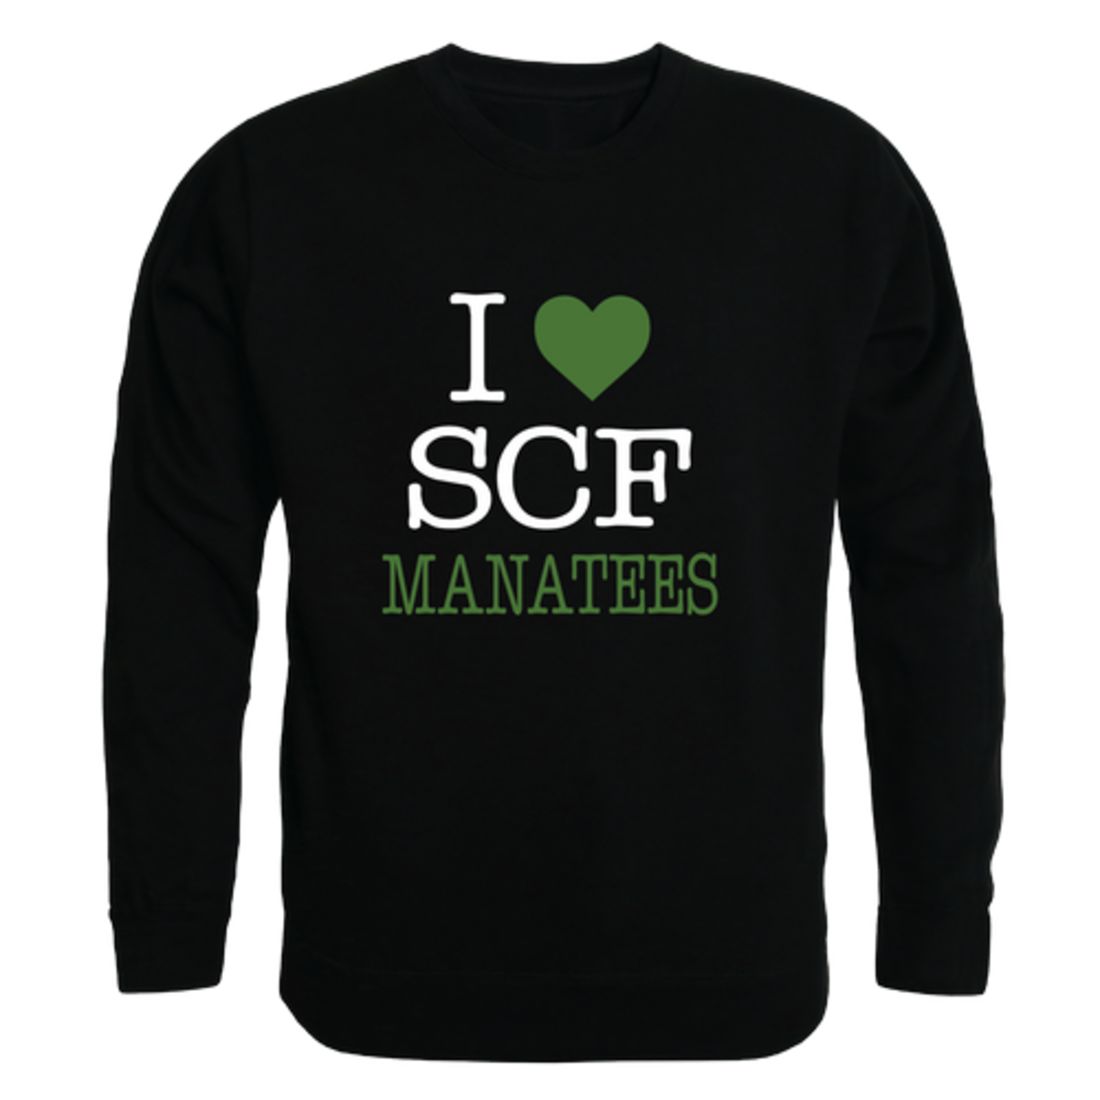 I-Love-State-College-of-Florida-Manatees-Fleece-Crewneck-Pullover-Sweatshirt